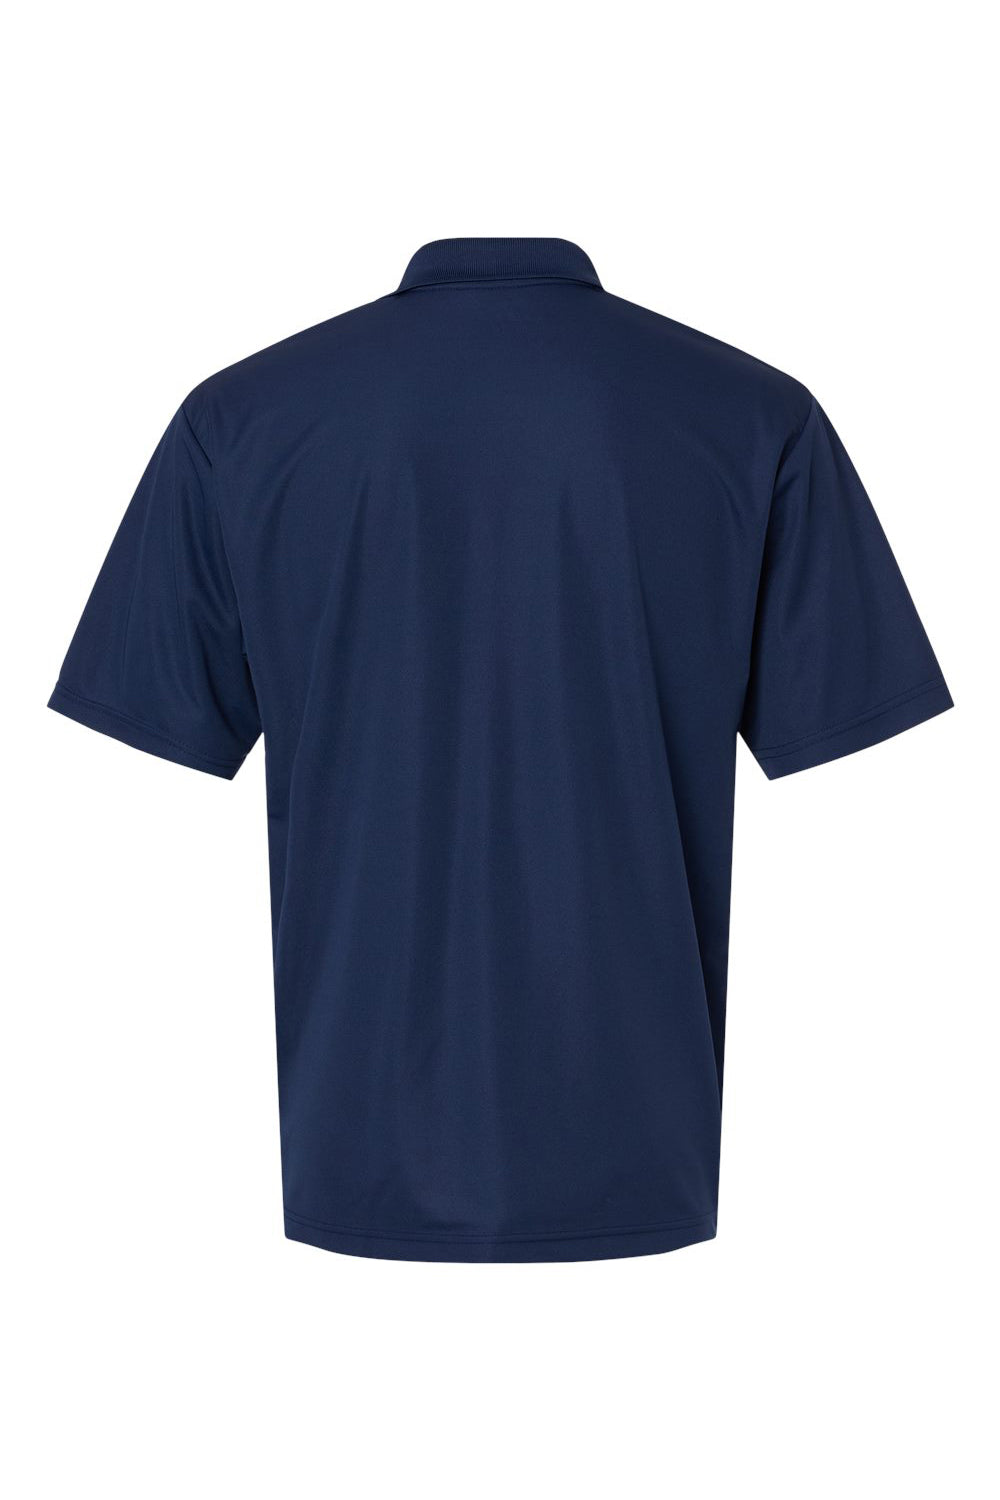 Paragon 500 Mens Sebring Performance Short Sleeve Polo Shirt Deep Navy Blue Flat Back